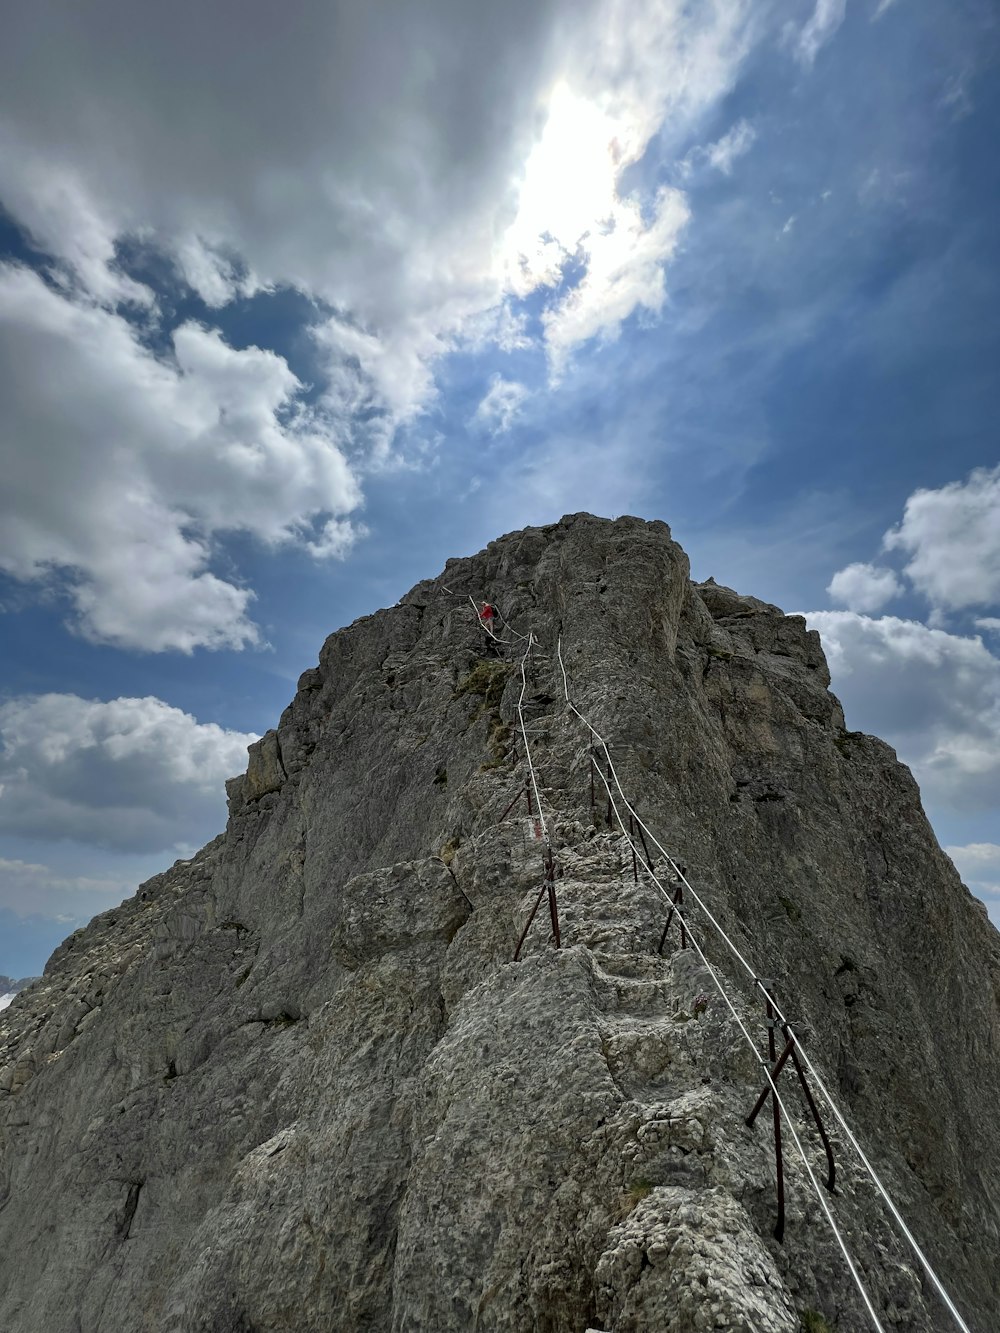 a man climbing up a mountain with a ladder